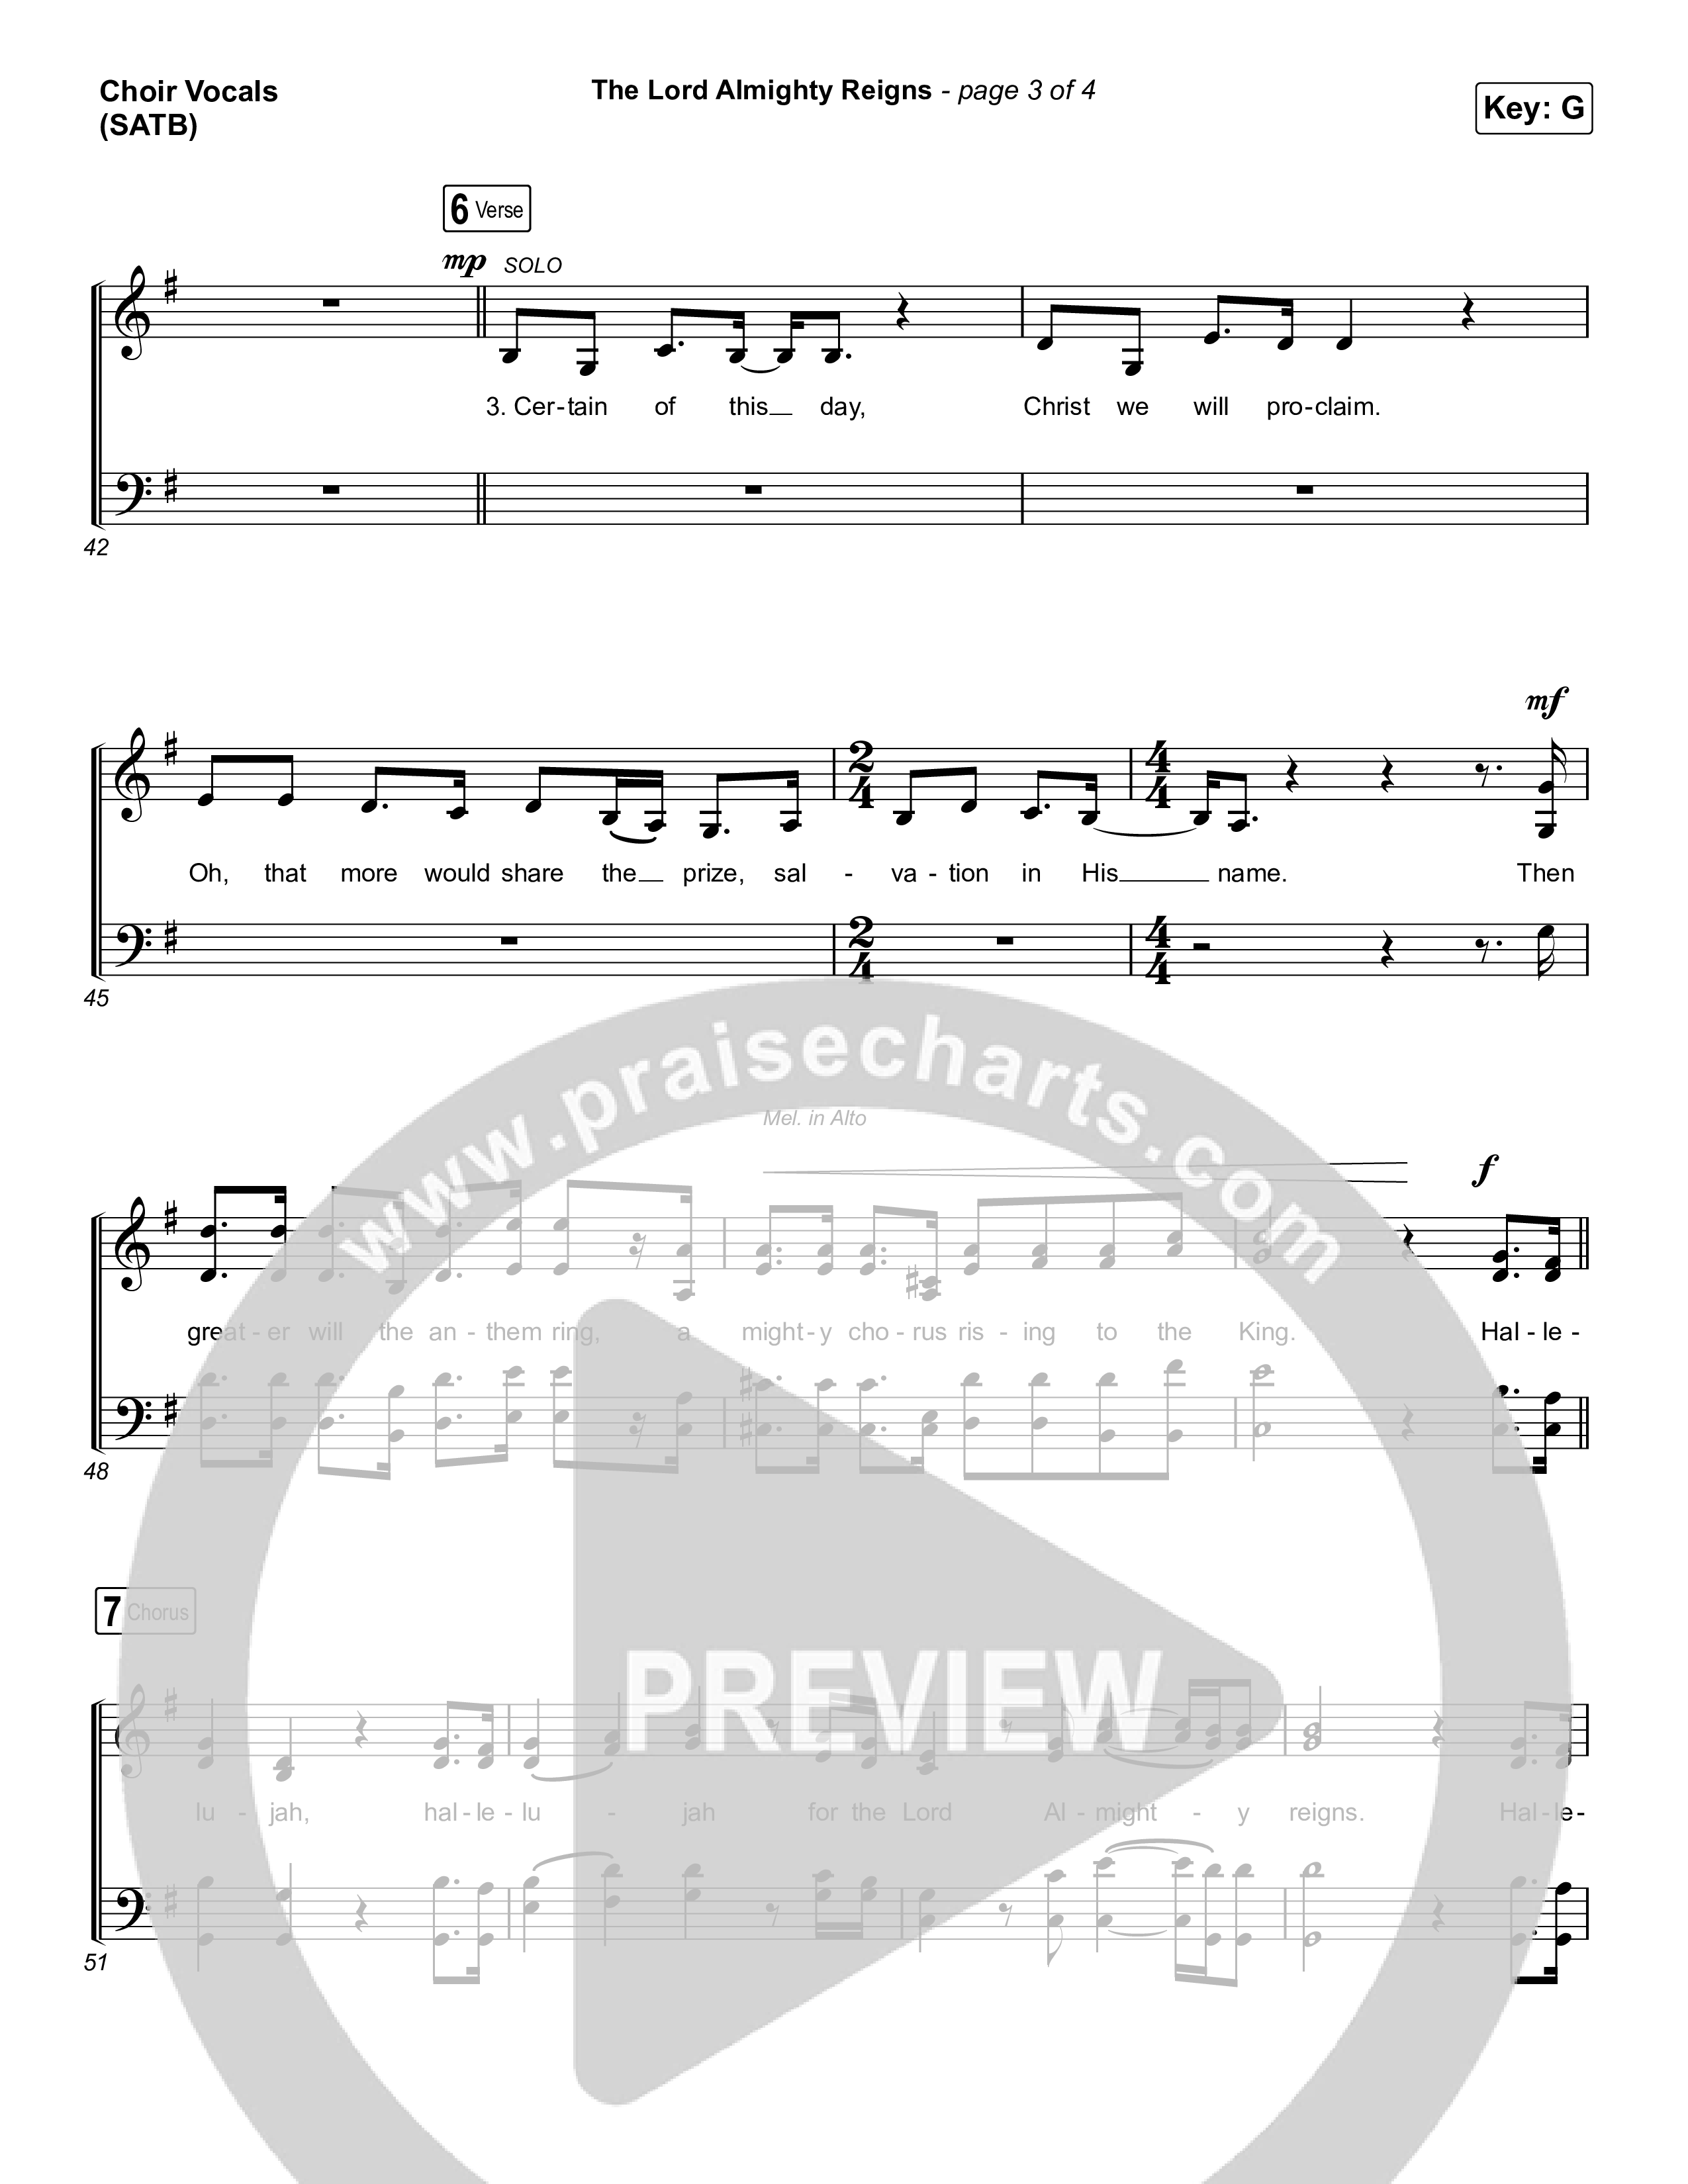 The Lord Almighty Reigns (Choral Anthem SATB) Choir Sheet (SATB) (Keith & Kristyn Getty / Arr. Luke Gambill)